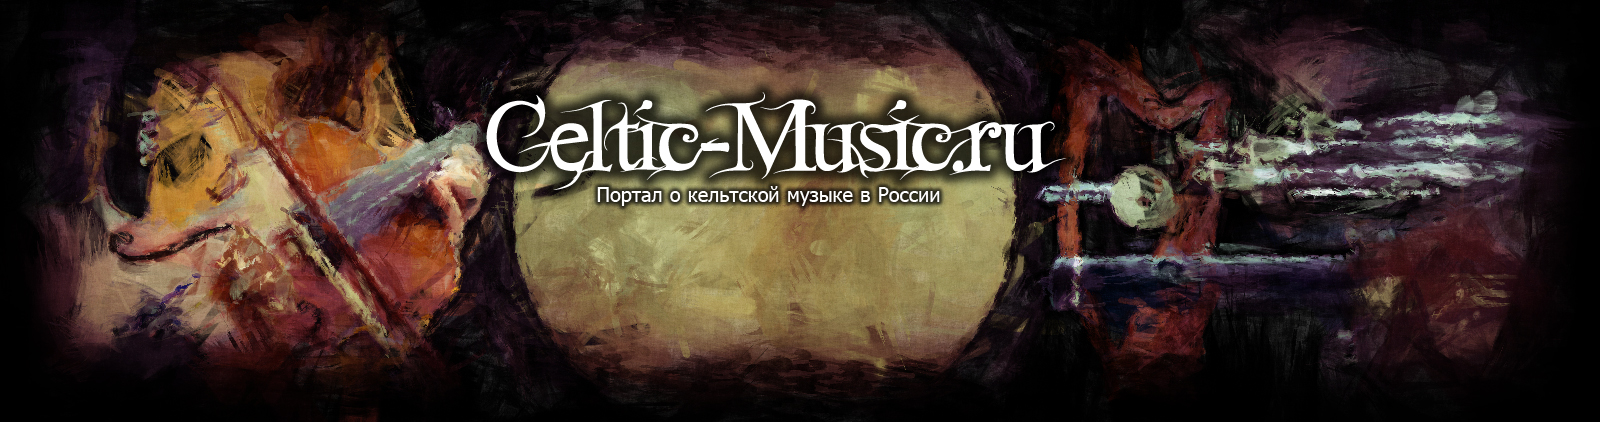 www.celtic-music.ru